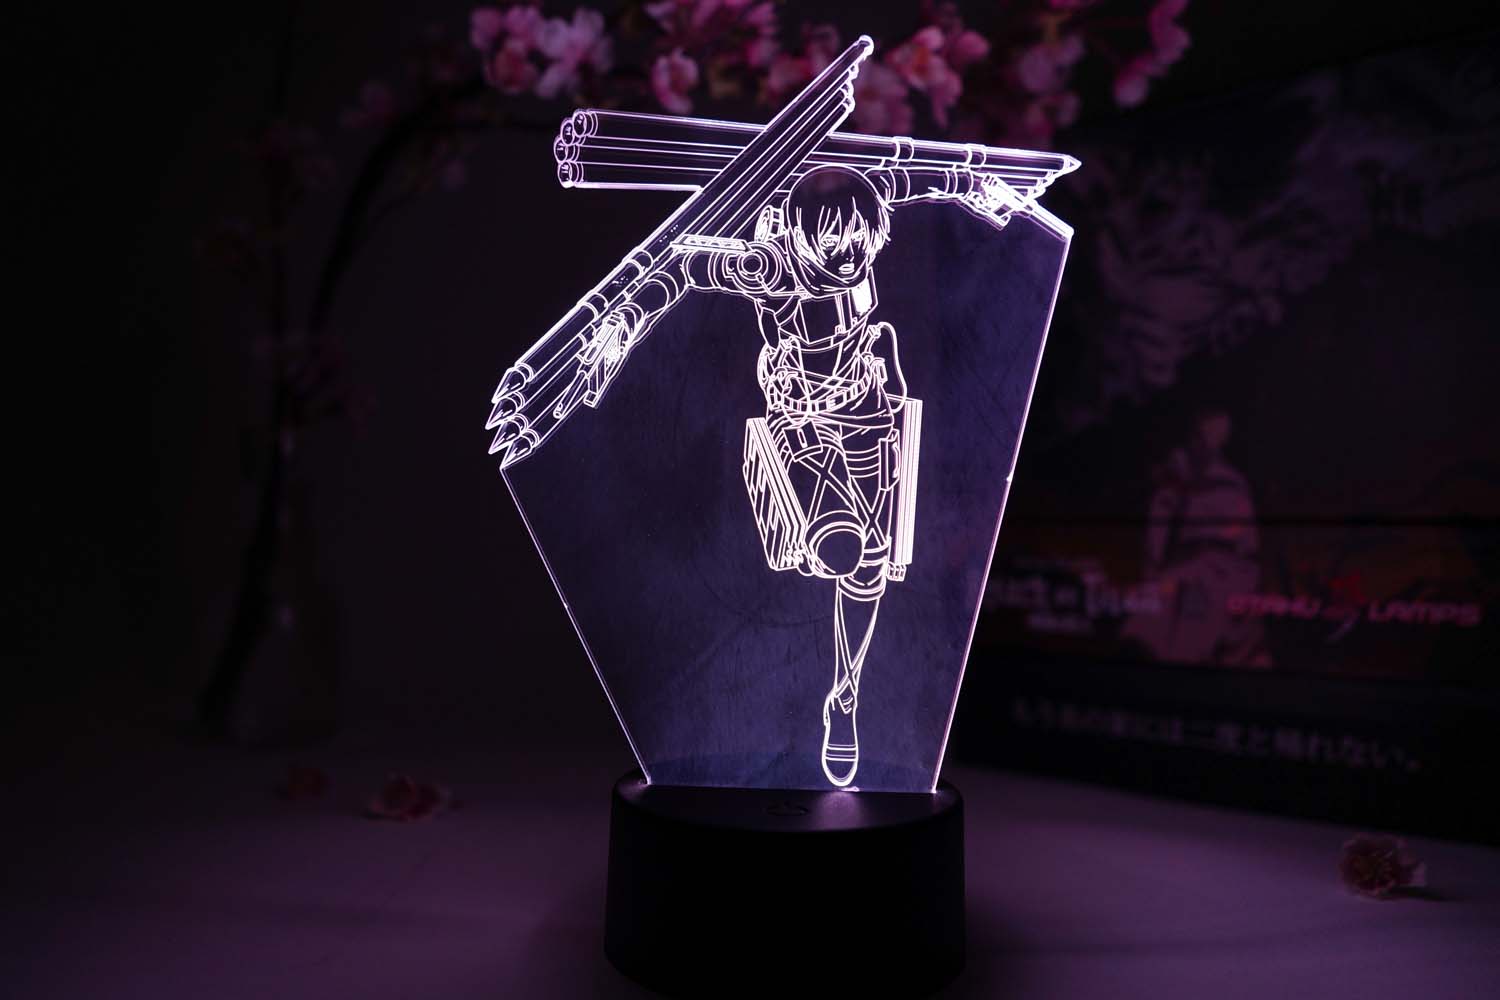 Mikasa Final Otaku Lamp (Attack on Titan Final Season)